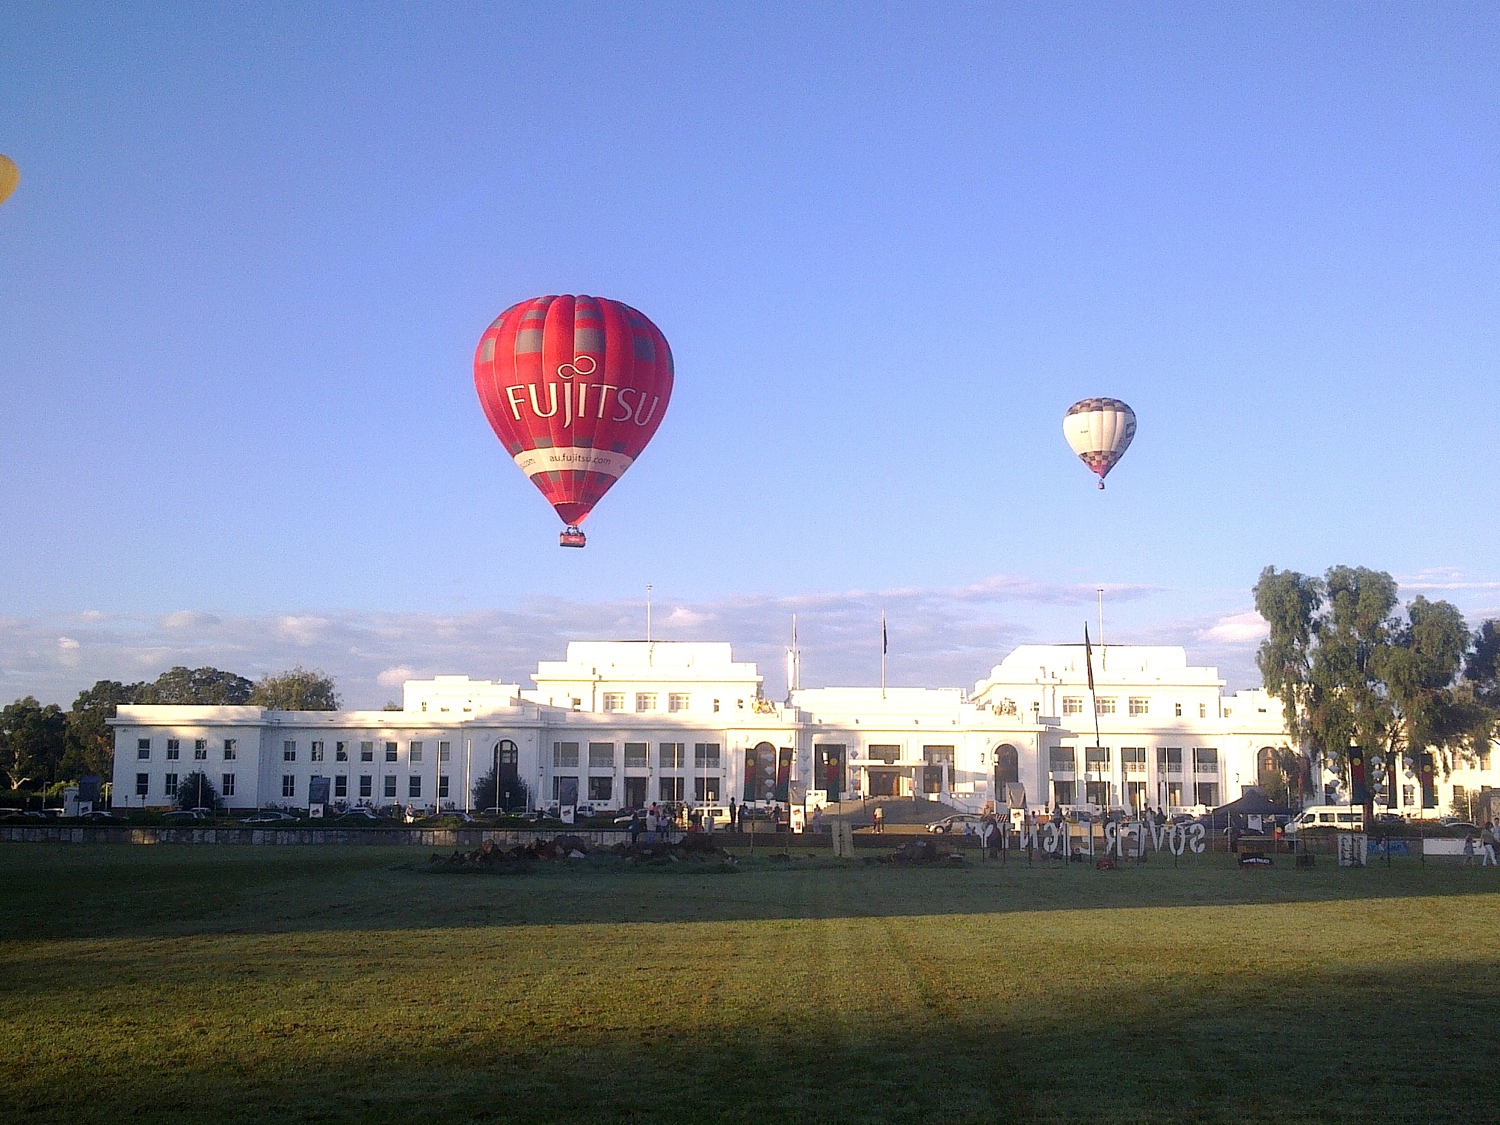 Fujitsu Hot Air Balloon Over Parliament House.jpeg